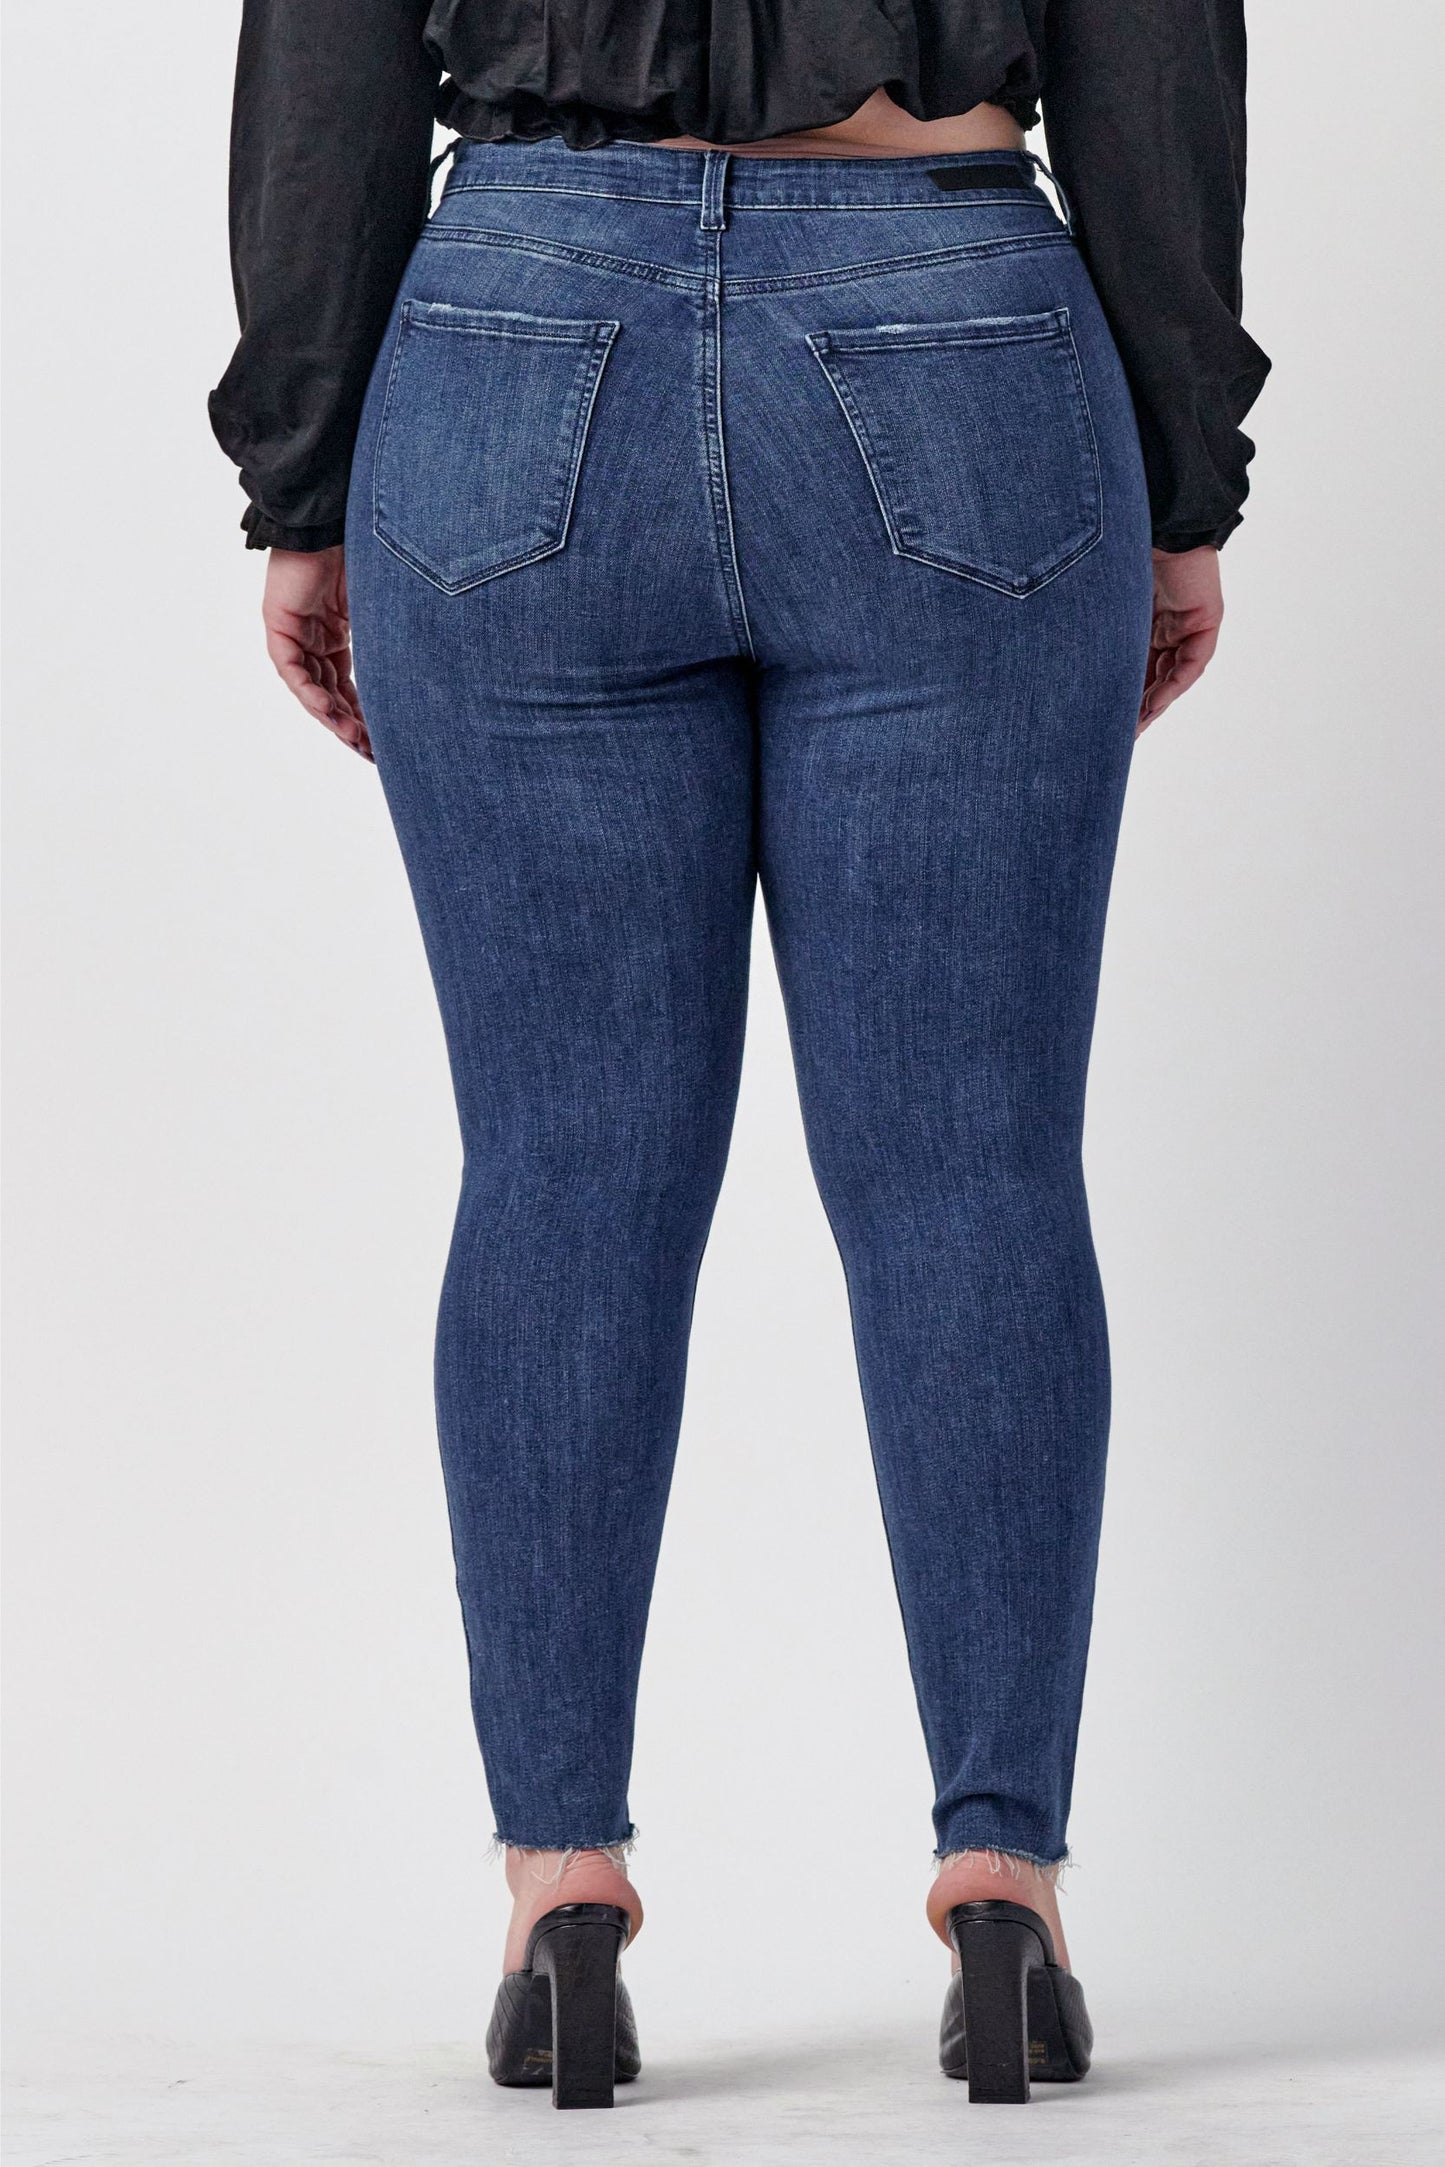 Le jean fashion taille haute #4 (14-22)